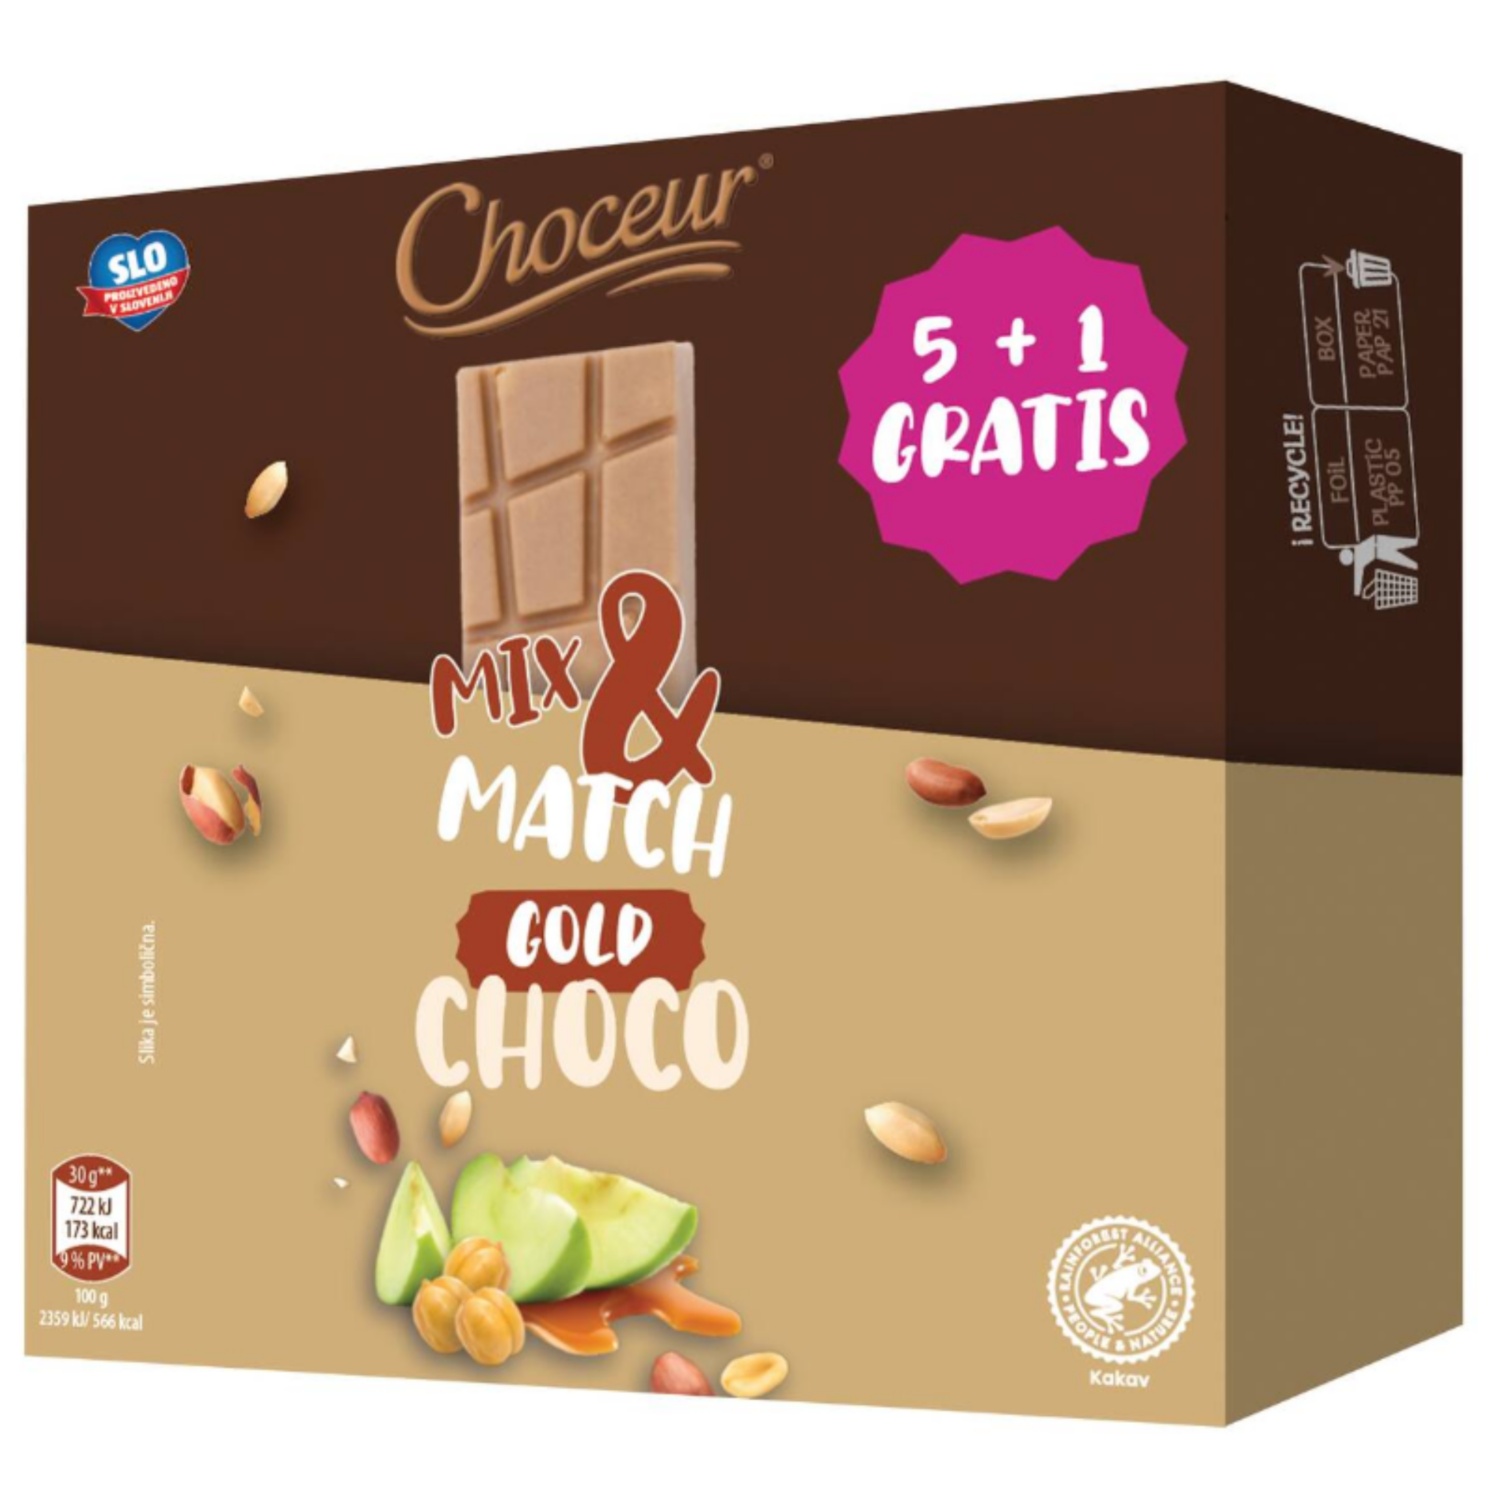 CHOCEUR Čokoladice Mix&Match, gold choco